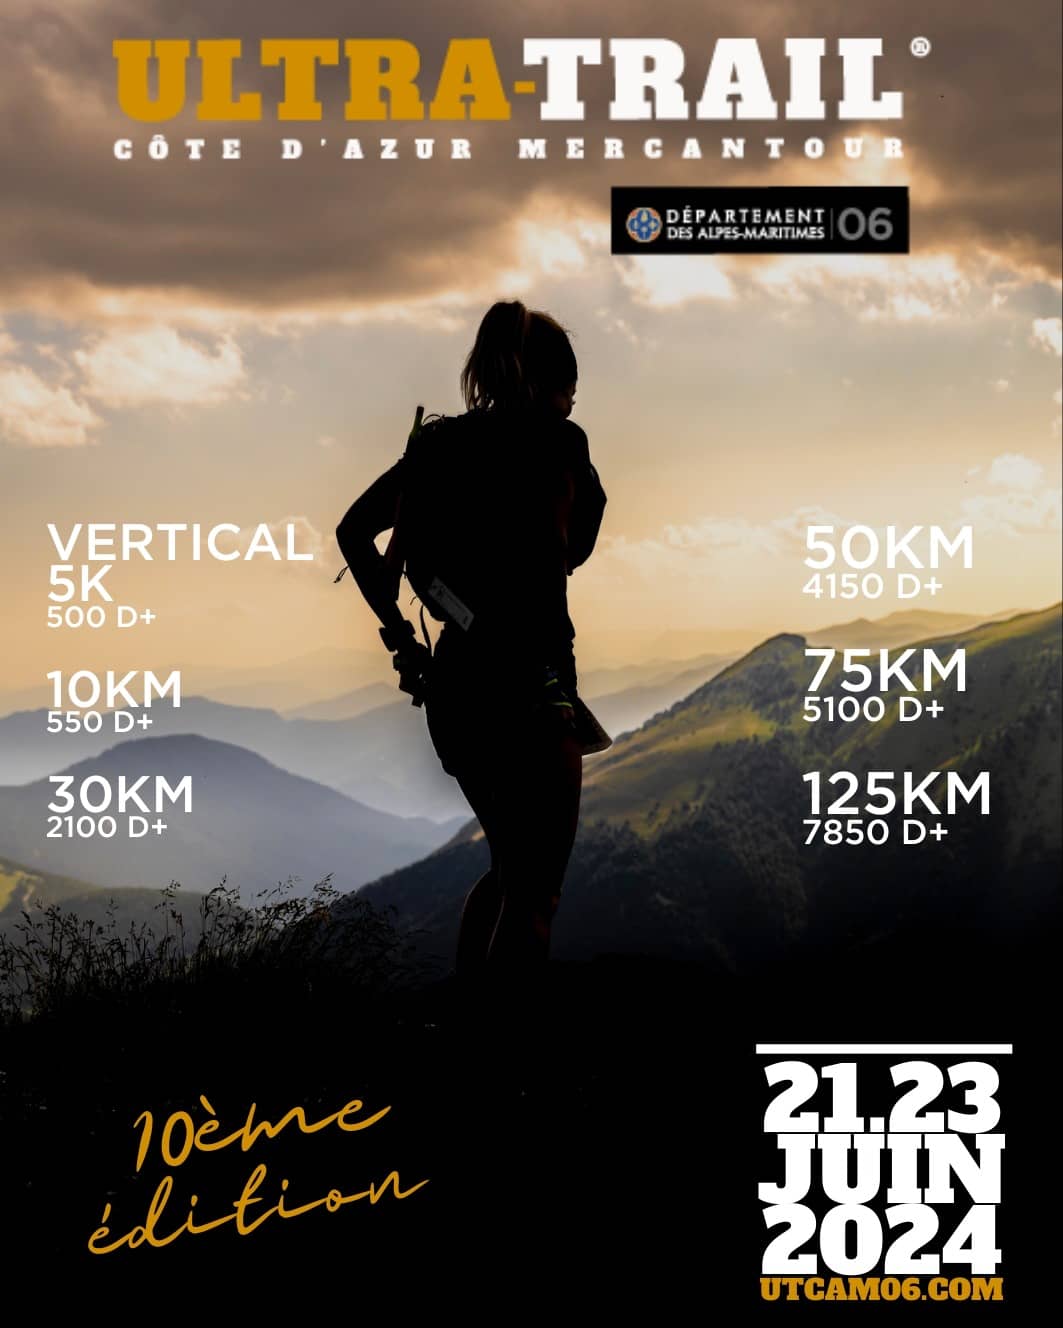 Affiche Ultra Trail Cote d'Azur Mercantour UTCAM 2024